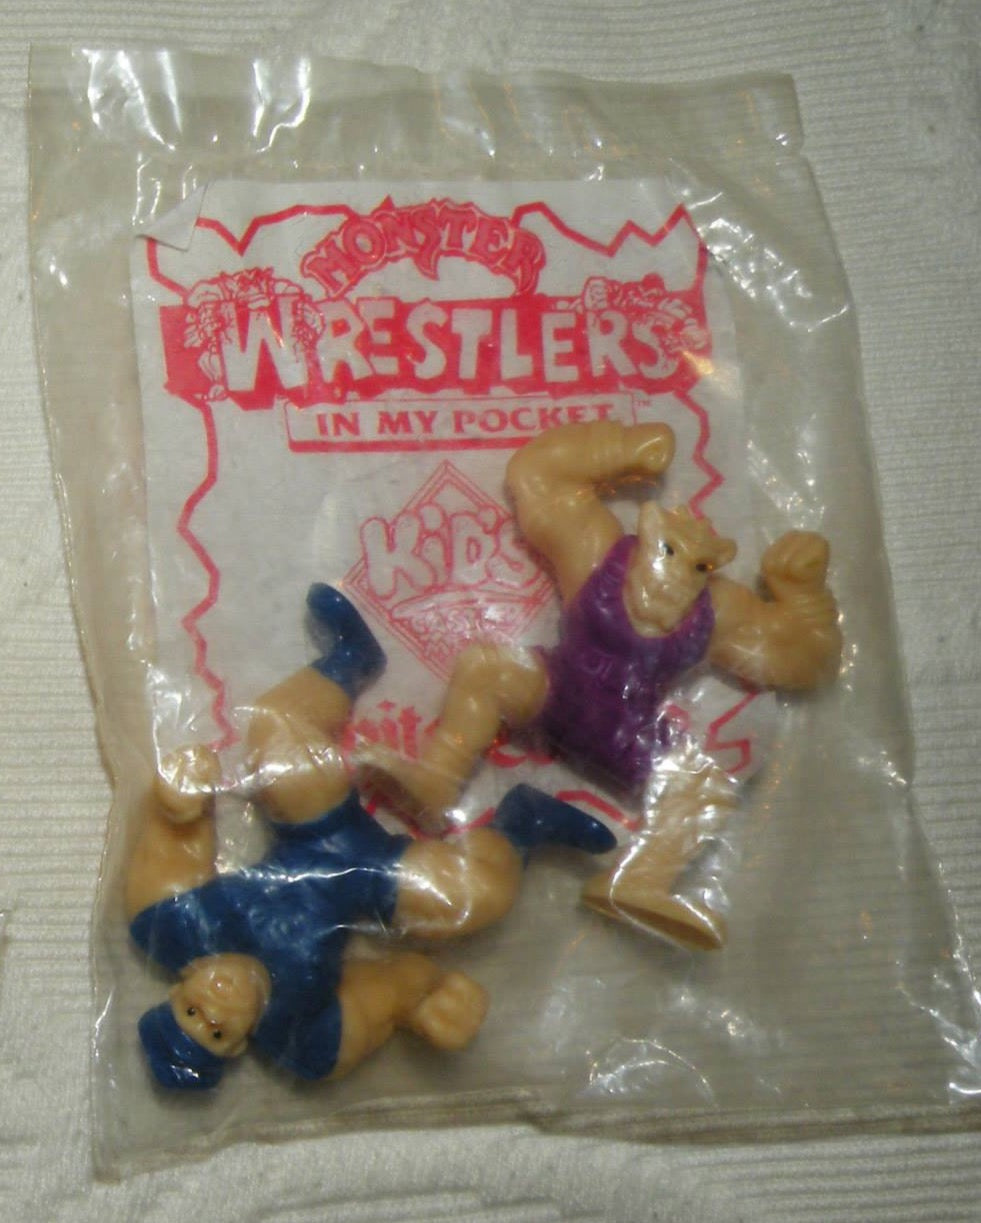 1996 Matchbox Monster Wrestlers In My Pocket #37: Sergeant Strangler [Exclusive]